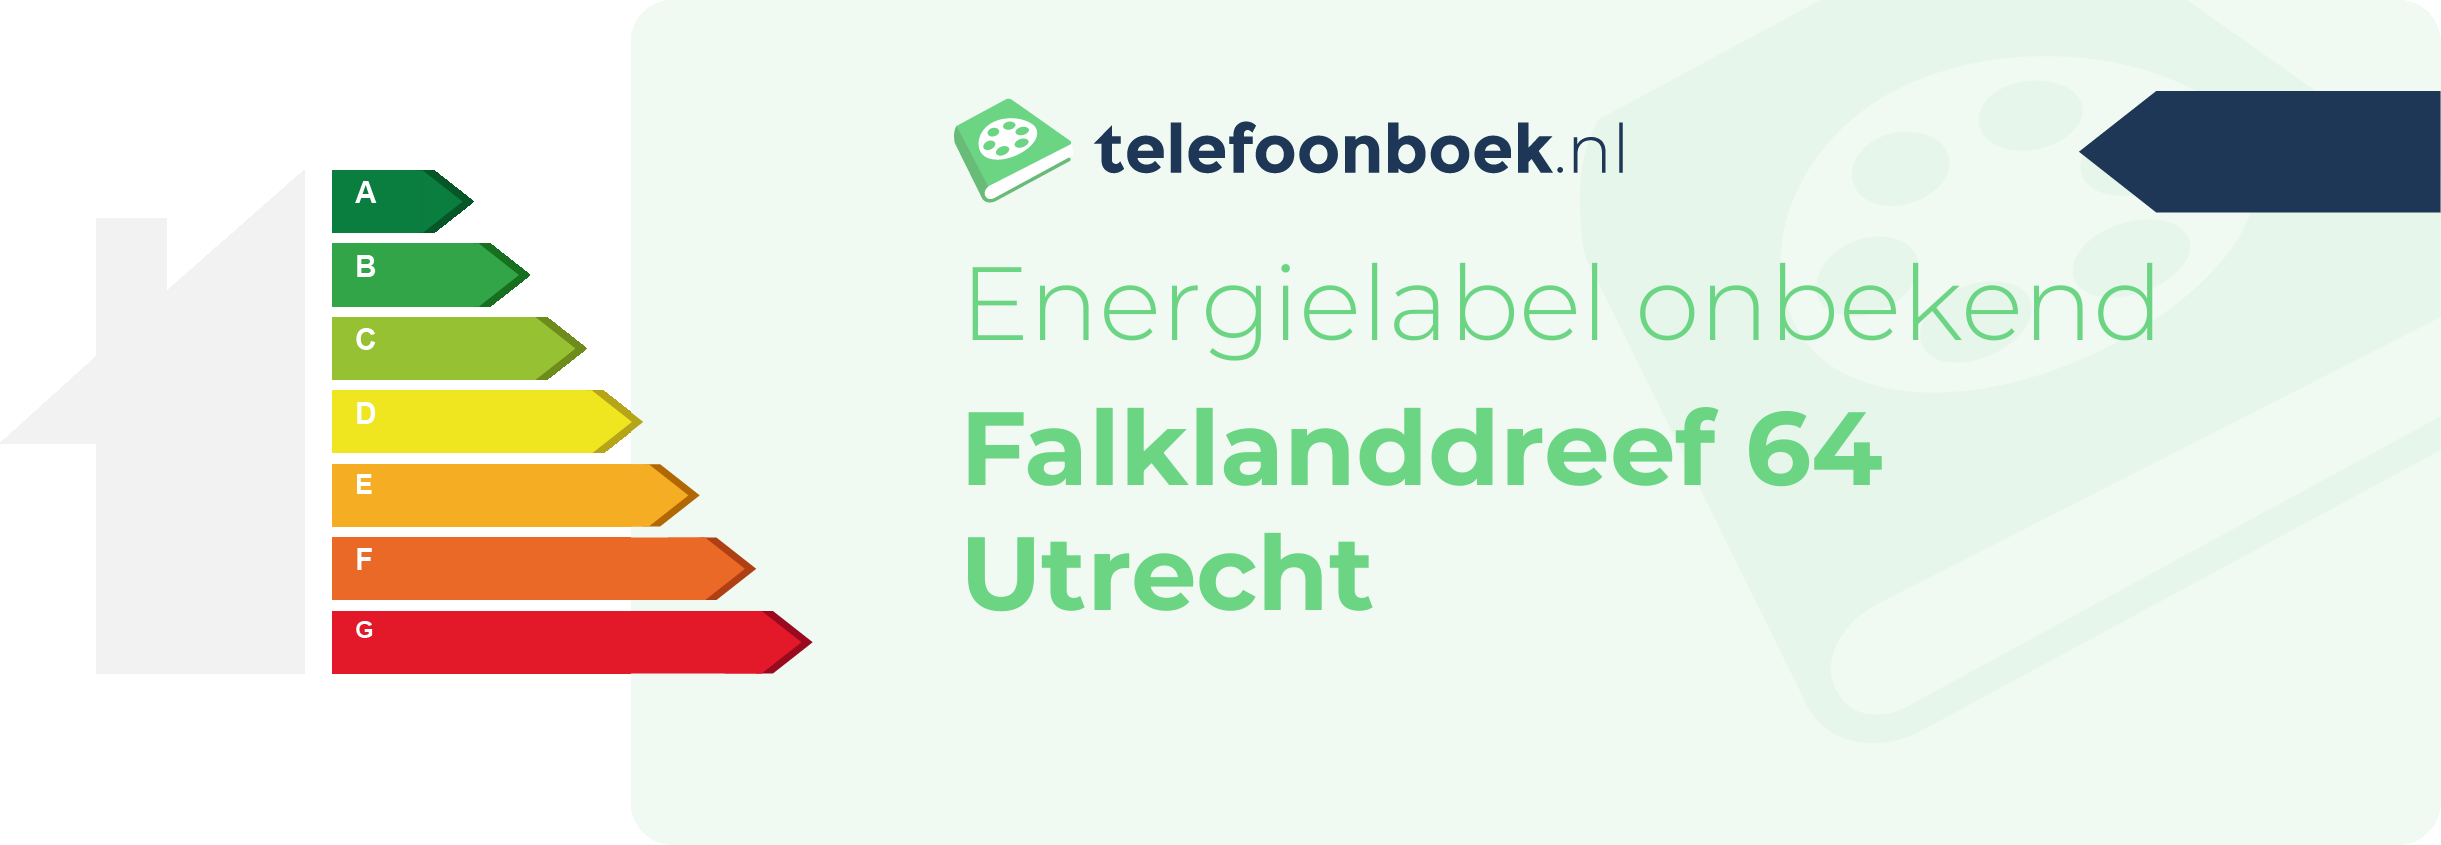 Energielabel Falklanddreef 64 Utrecht